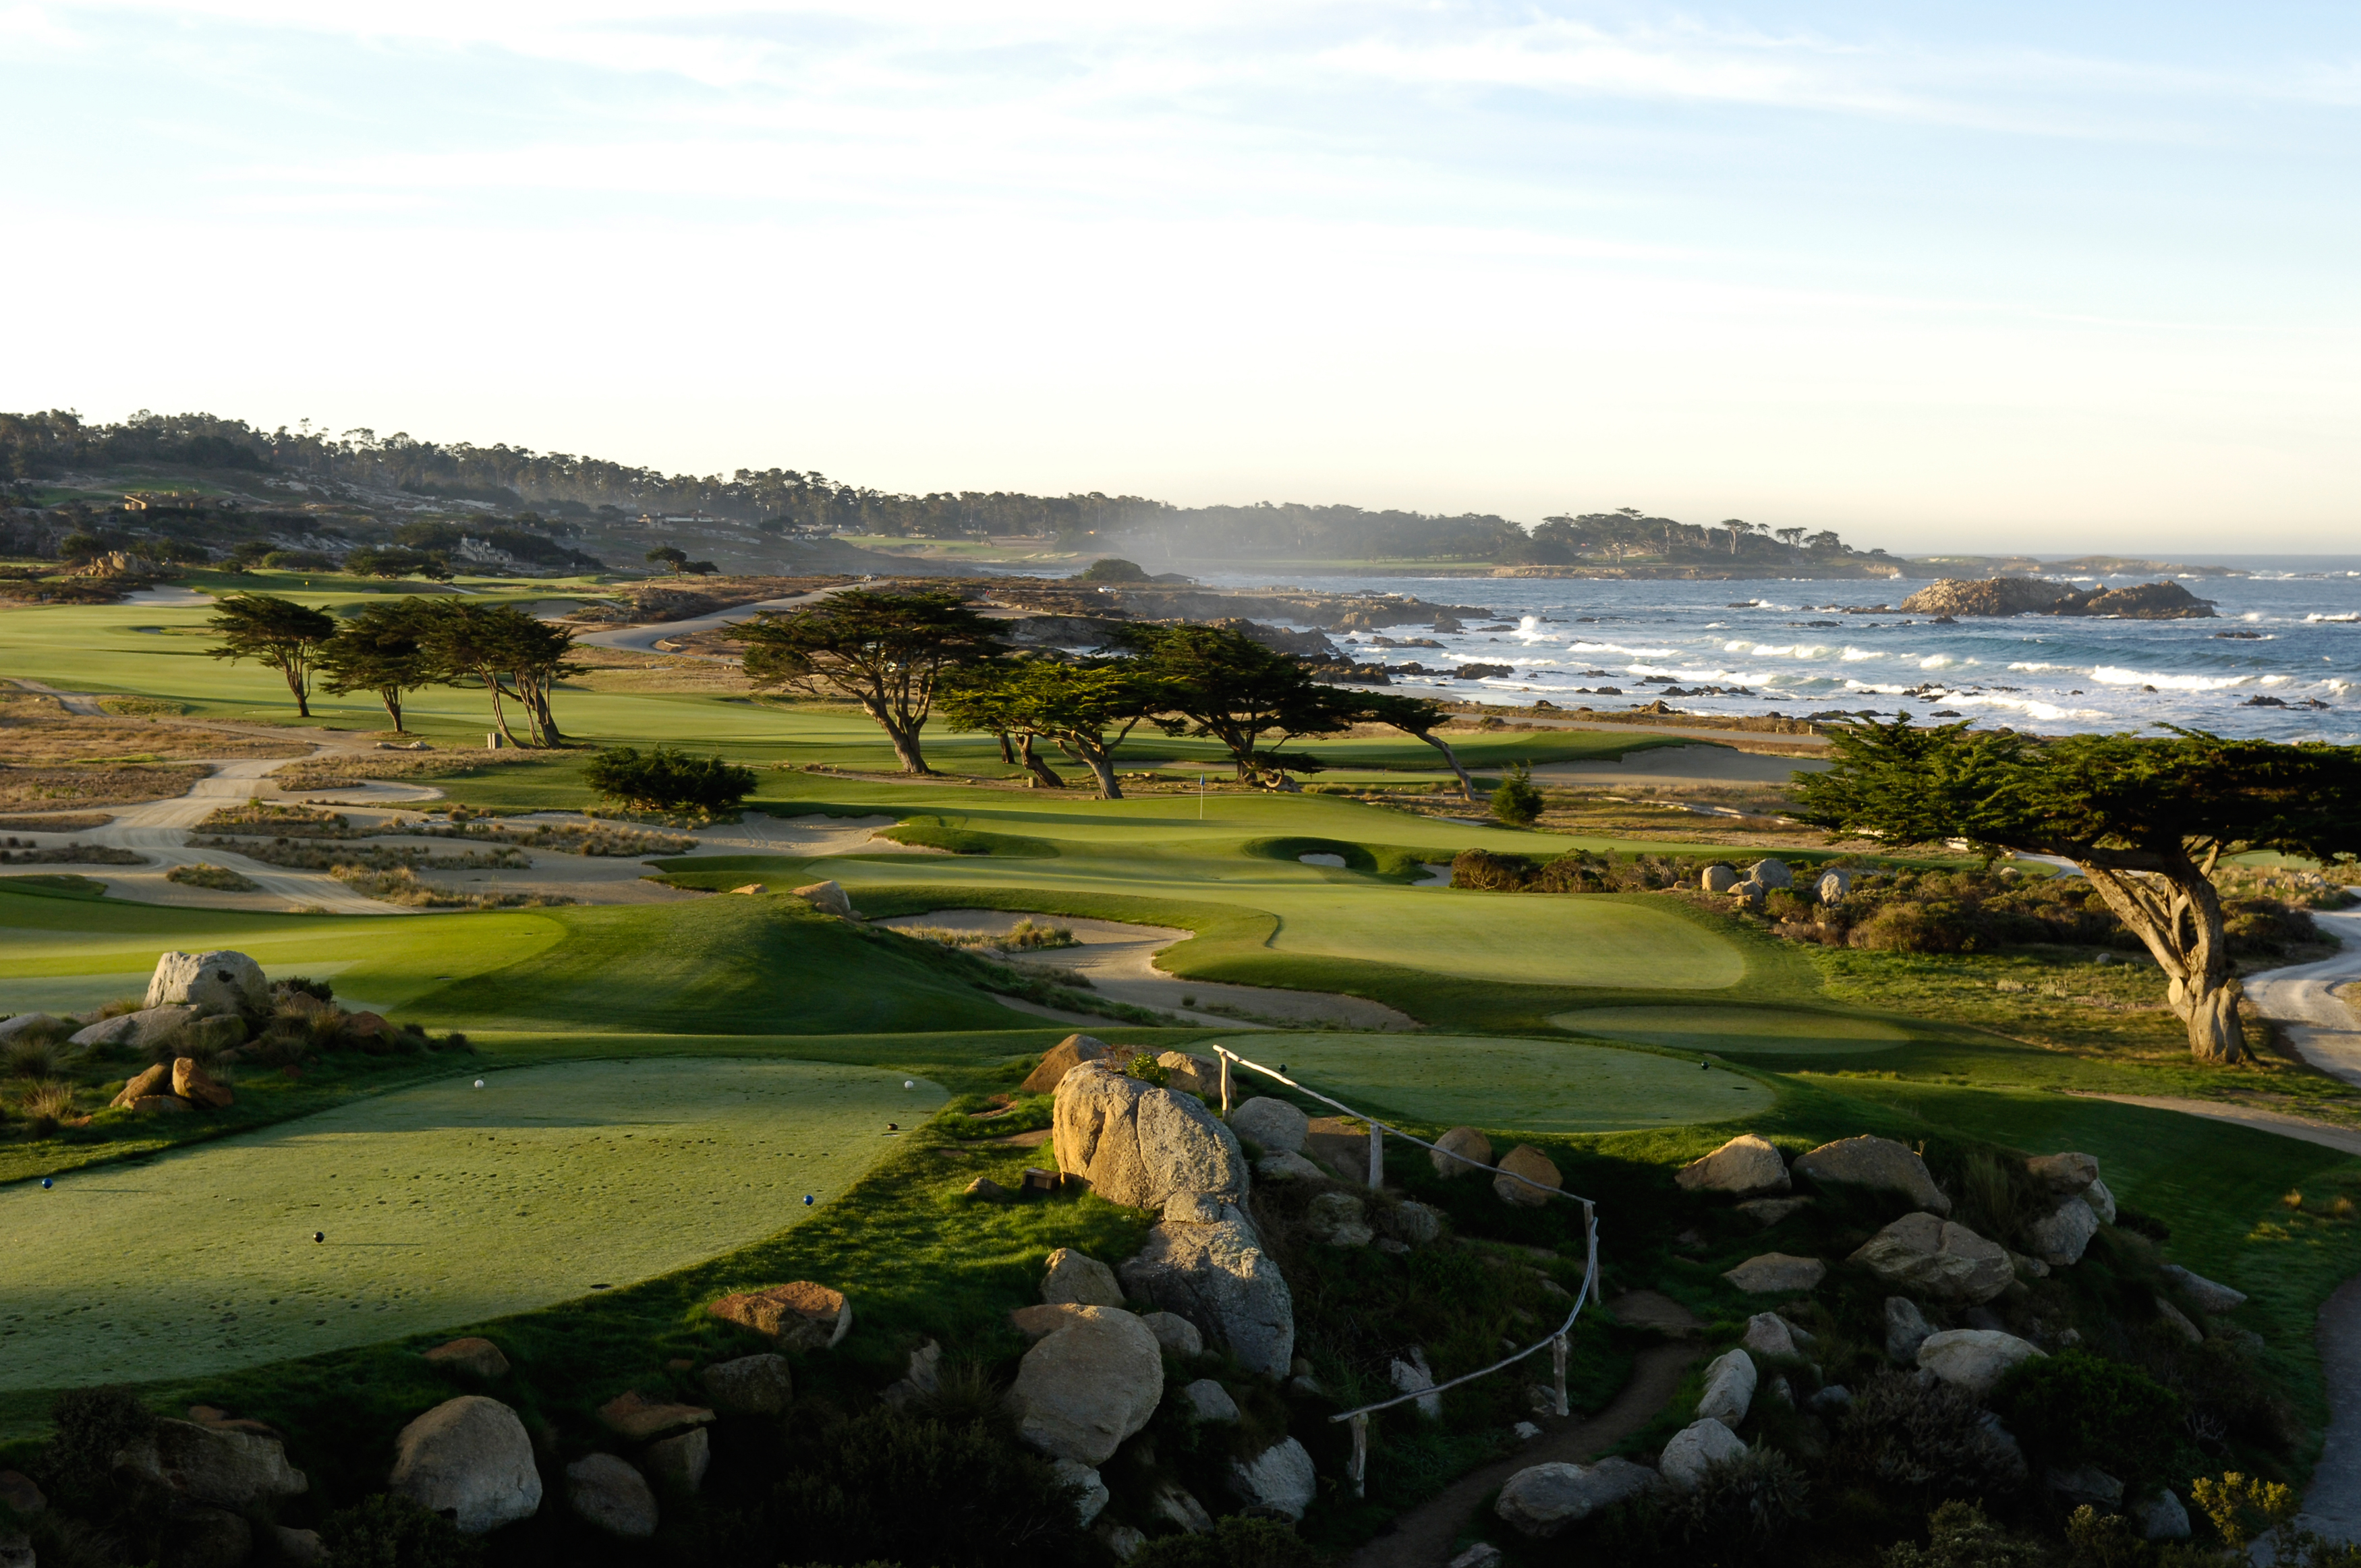 Monterey Peninsula Country Club: Shore | Courses | GolfDigest.com